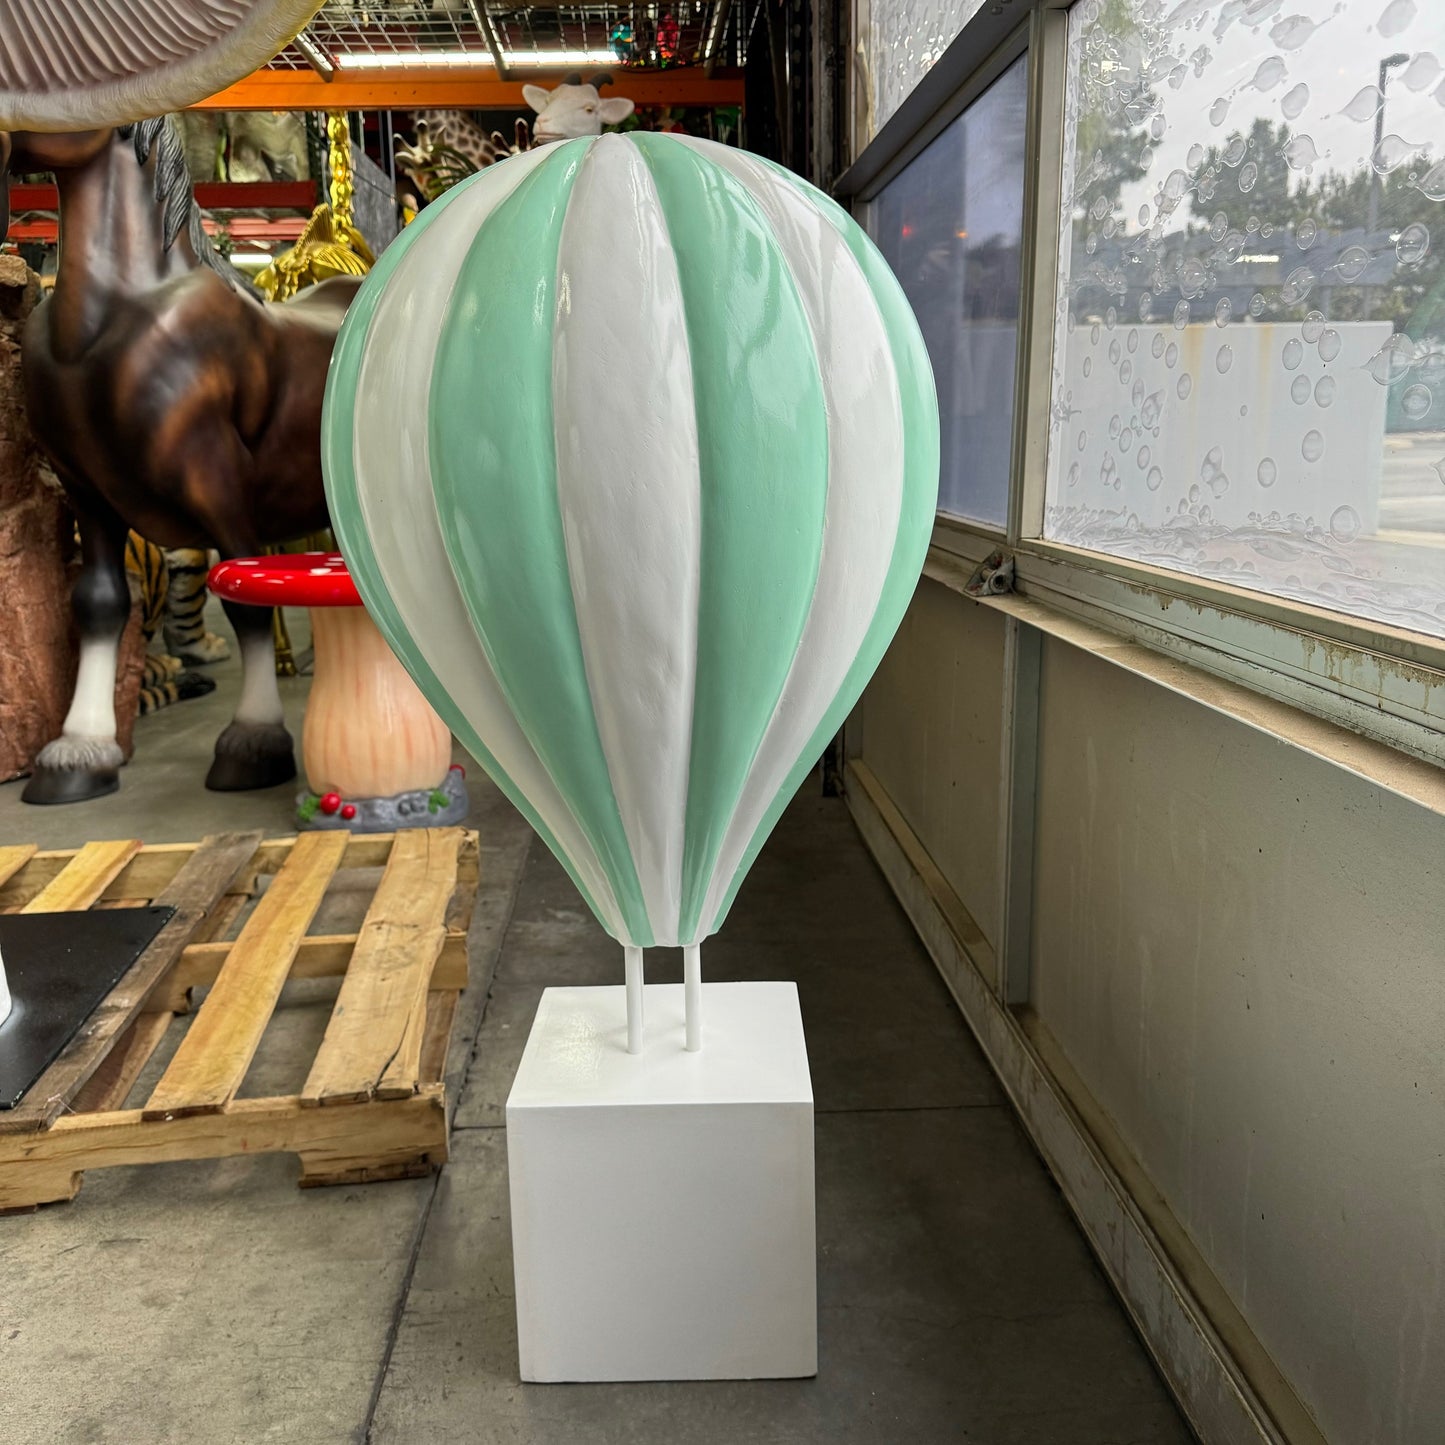 Small Green Hot Air Balloon Statue